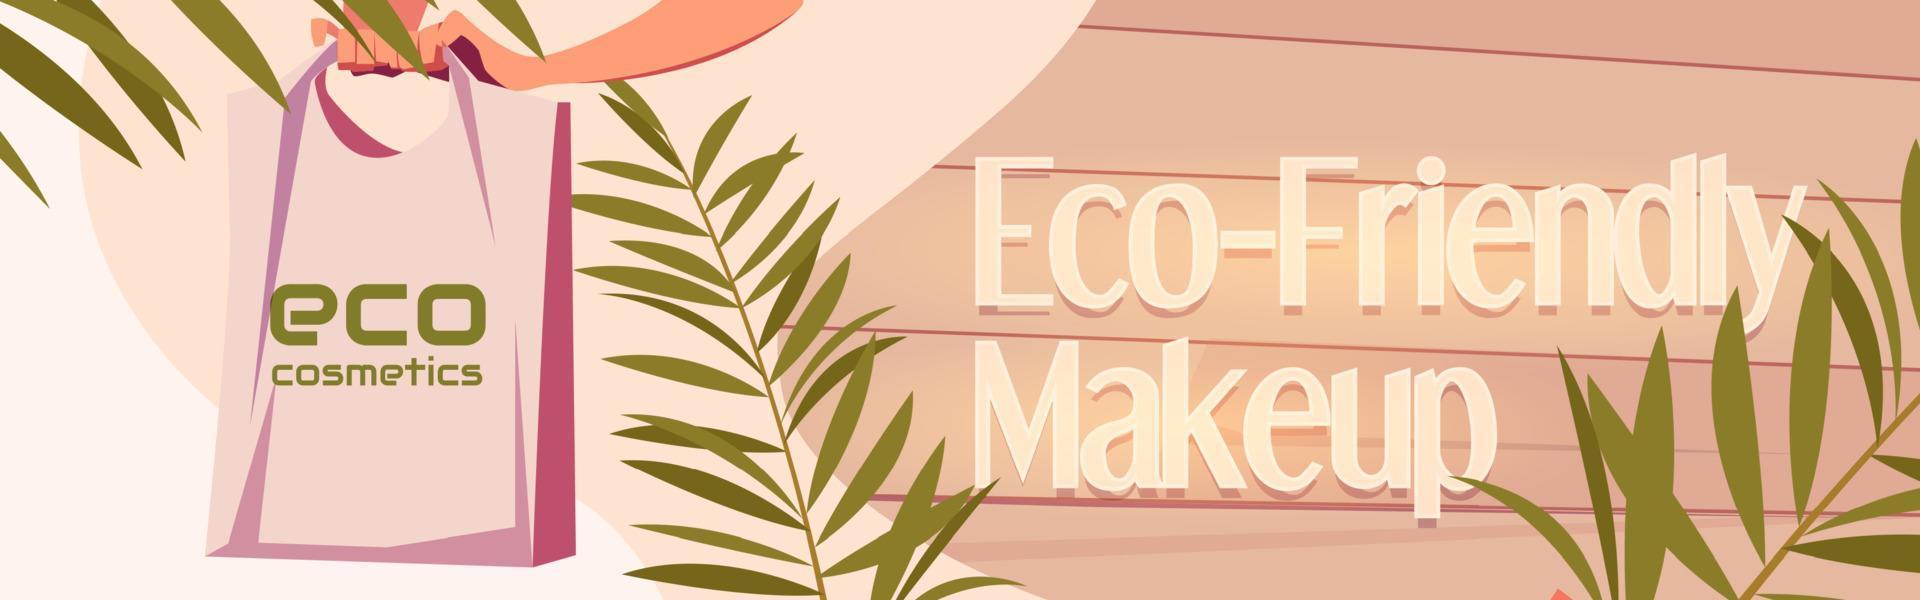 Eco cosmetics cartoon banner hand holding tote bag vector